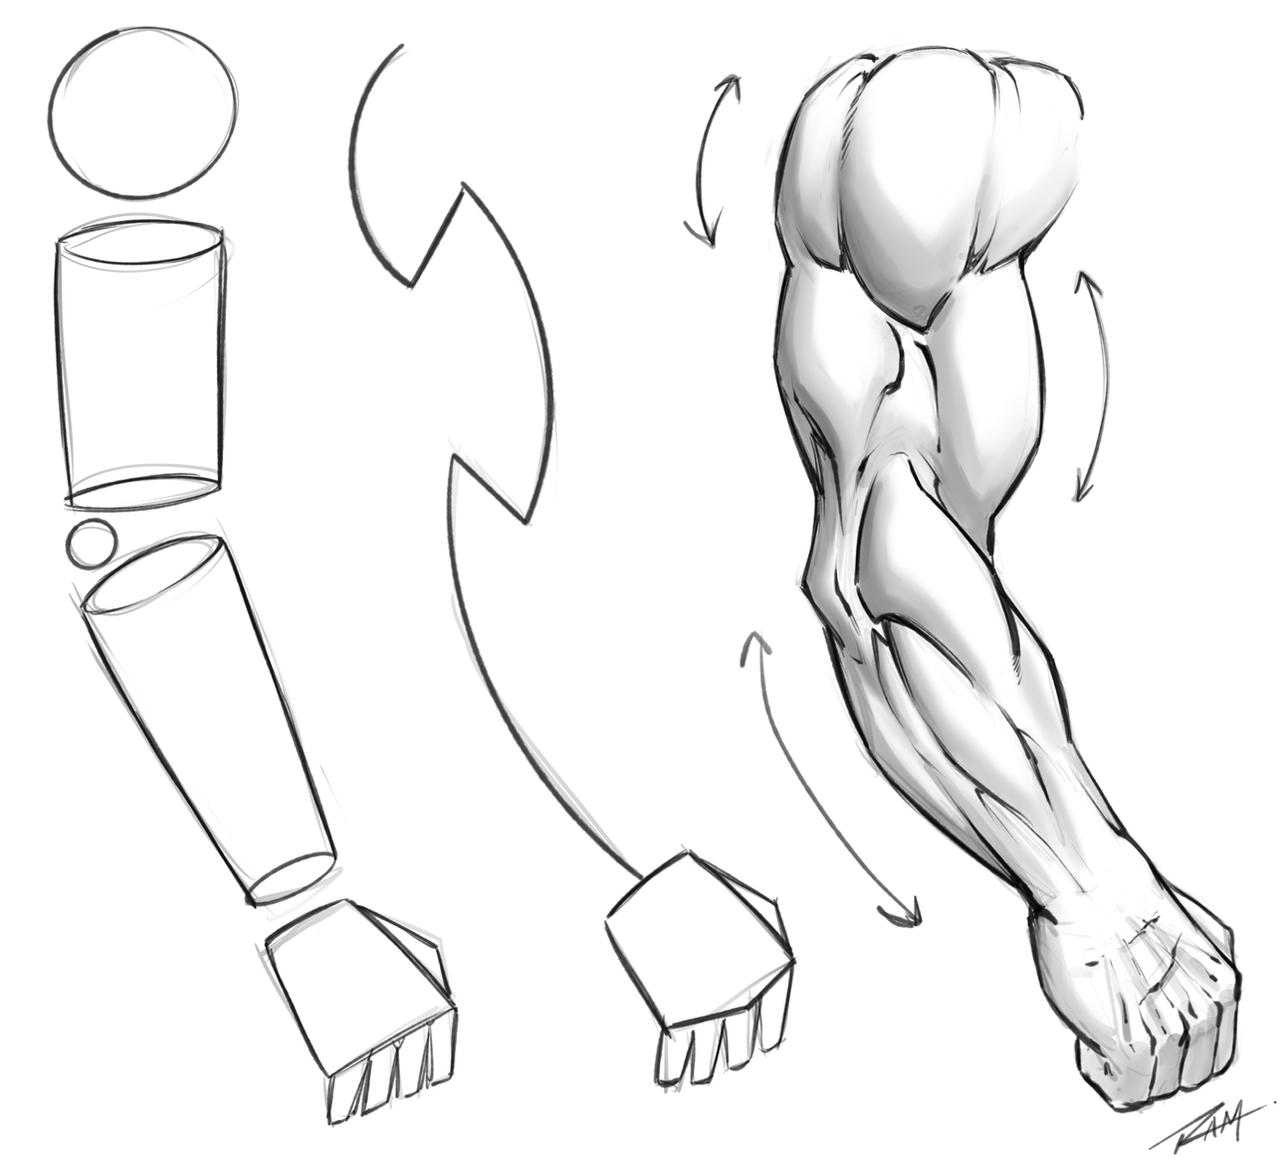 Arms Anatomy Drawing Image